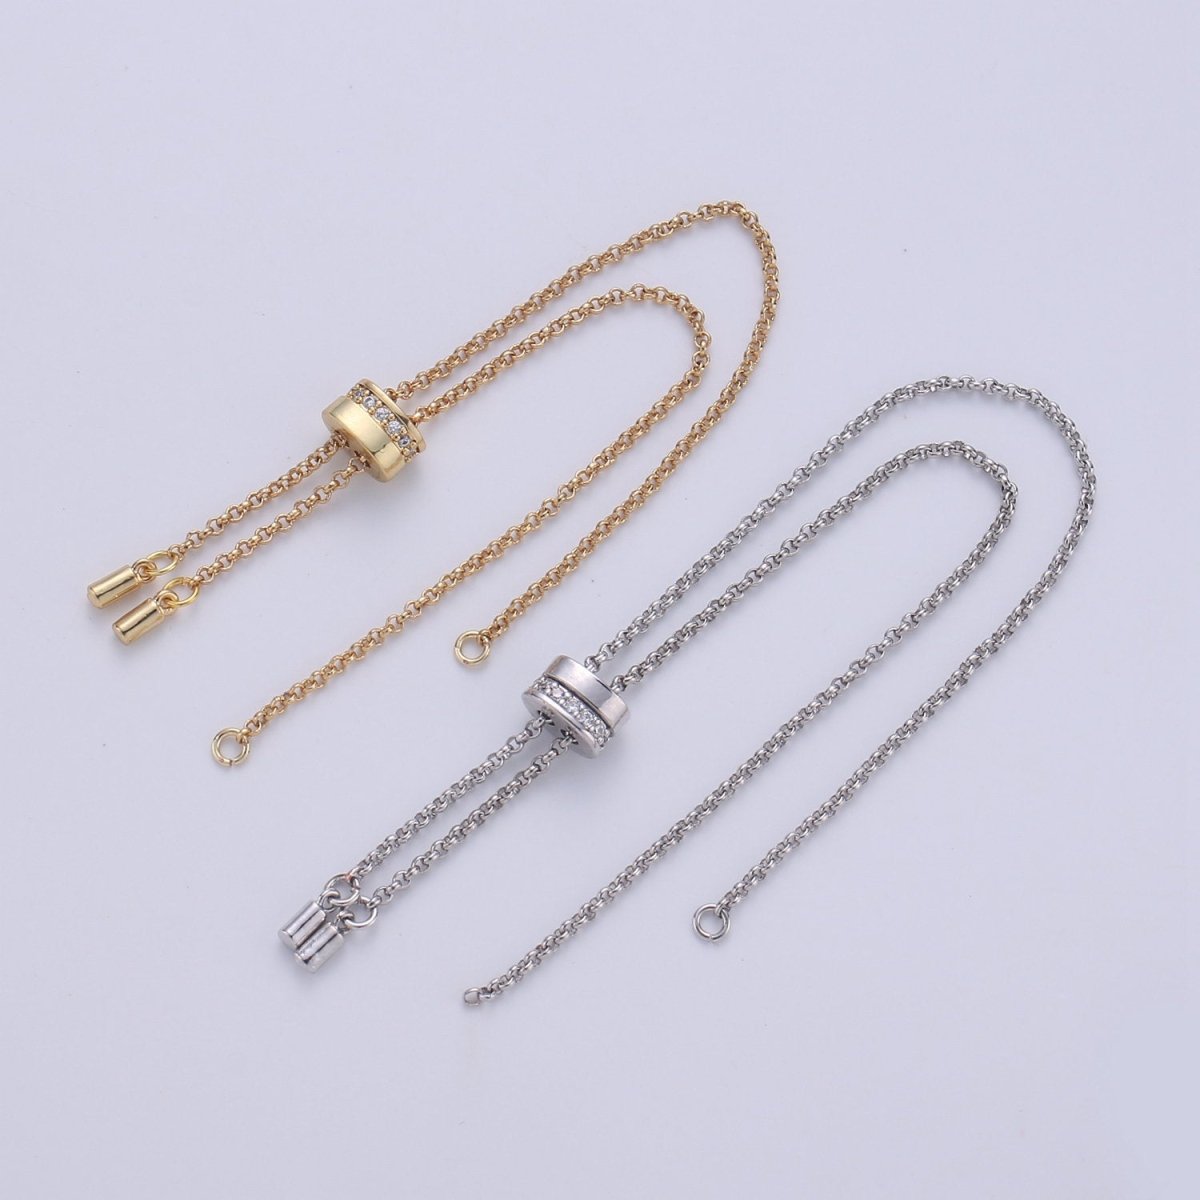 14k Gold Filled Adjustable Bracelet Half finished Chain Bracelet rubber stopper Silver Rolo Chain Wholesale 1pc/10pcs - DLUXCA